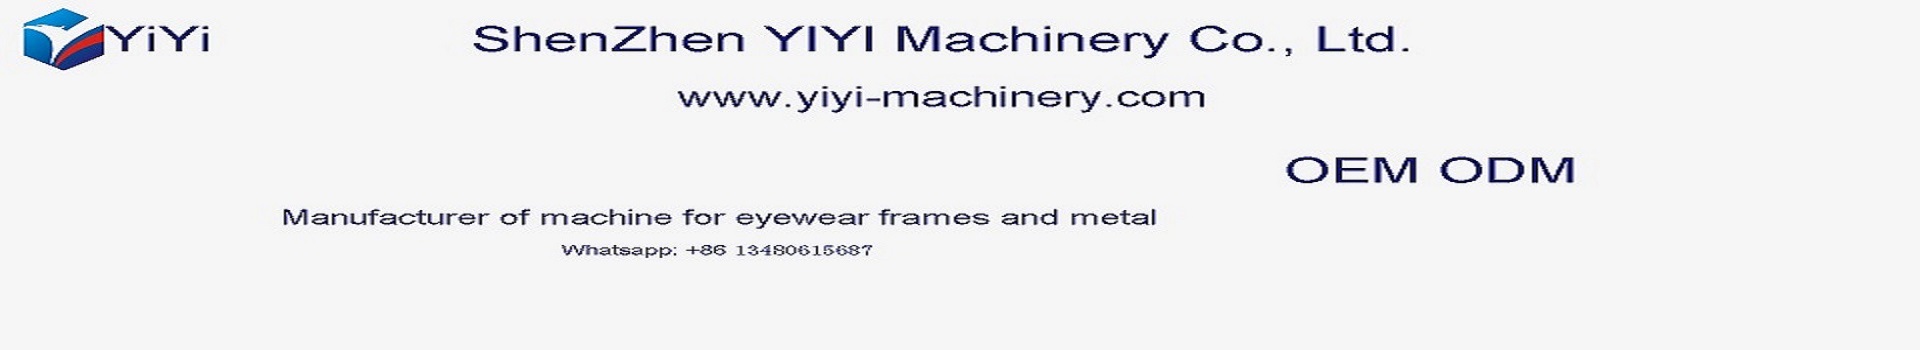 Shenzhen Yiyi Machinery Co., Ltd.